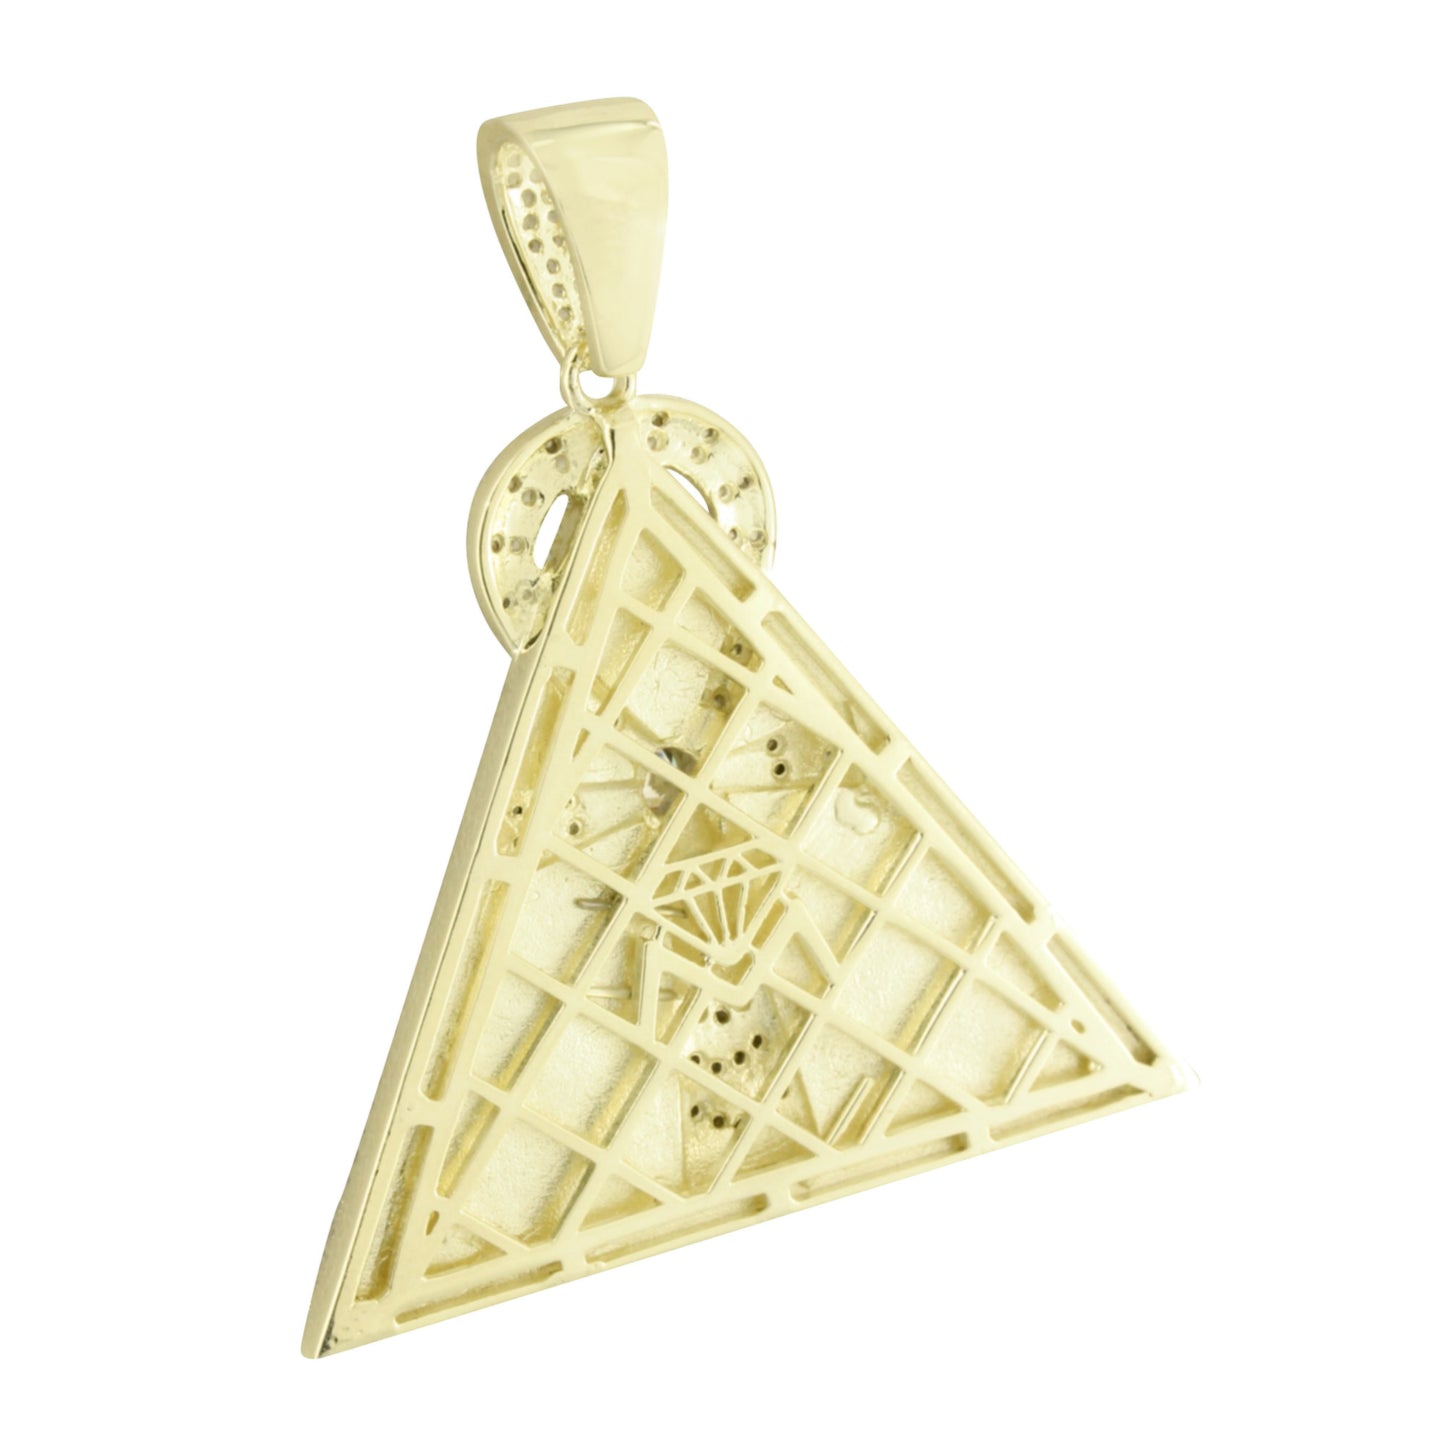 Unique Pyramid Ankh Cross Pendant Chain Gold Finish Sterling Silver